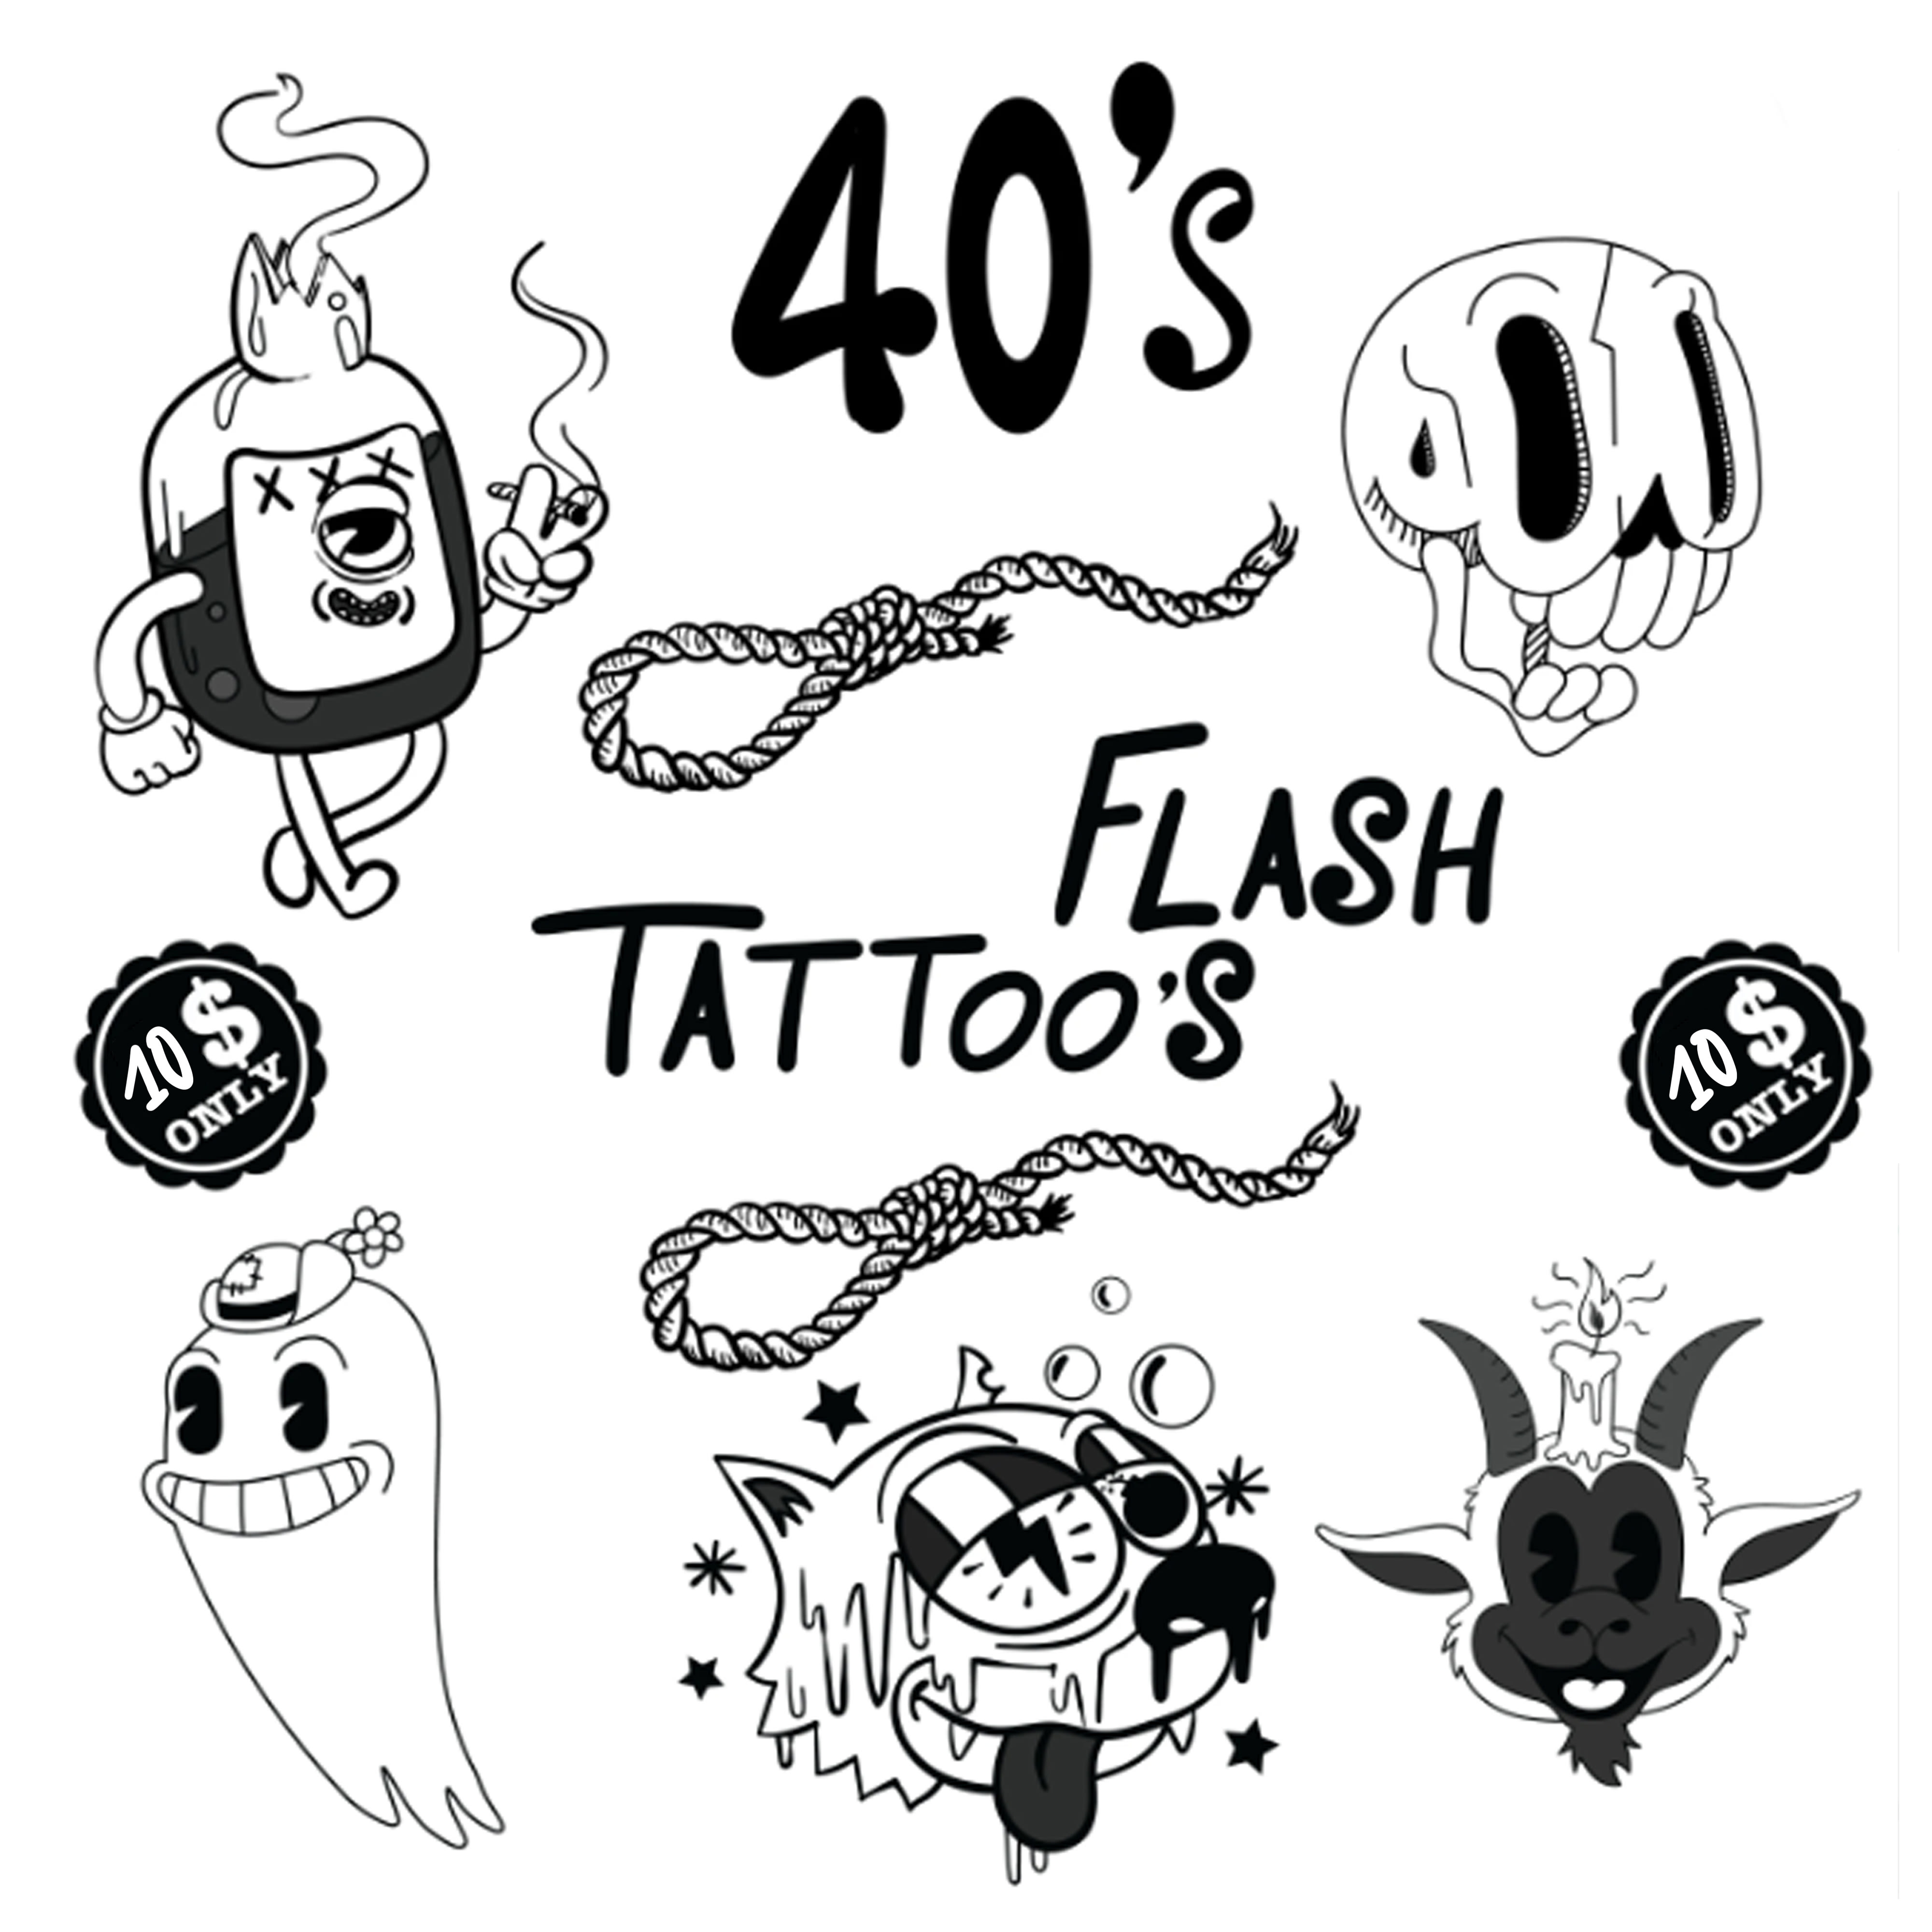 Create flash tattoos in 40s cartoon style by Hamingtone | Fiverr